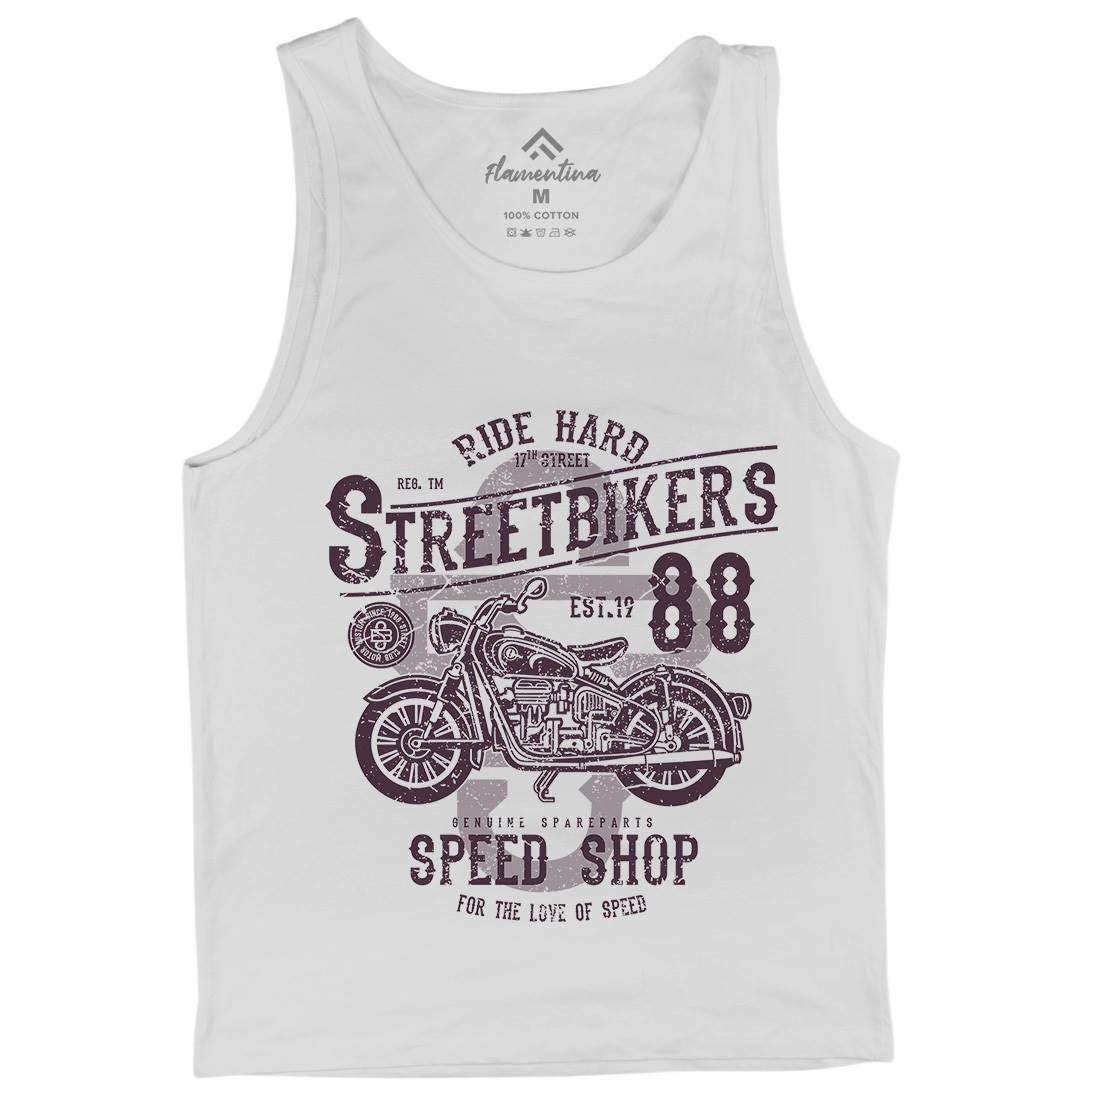 Street Bikers Mens Tank Top Vest Motorcycles A160